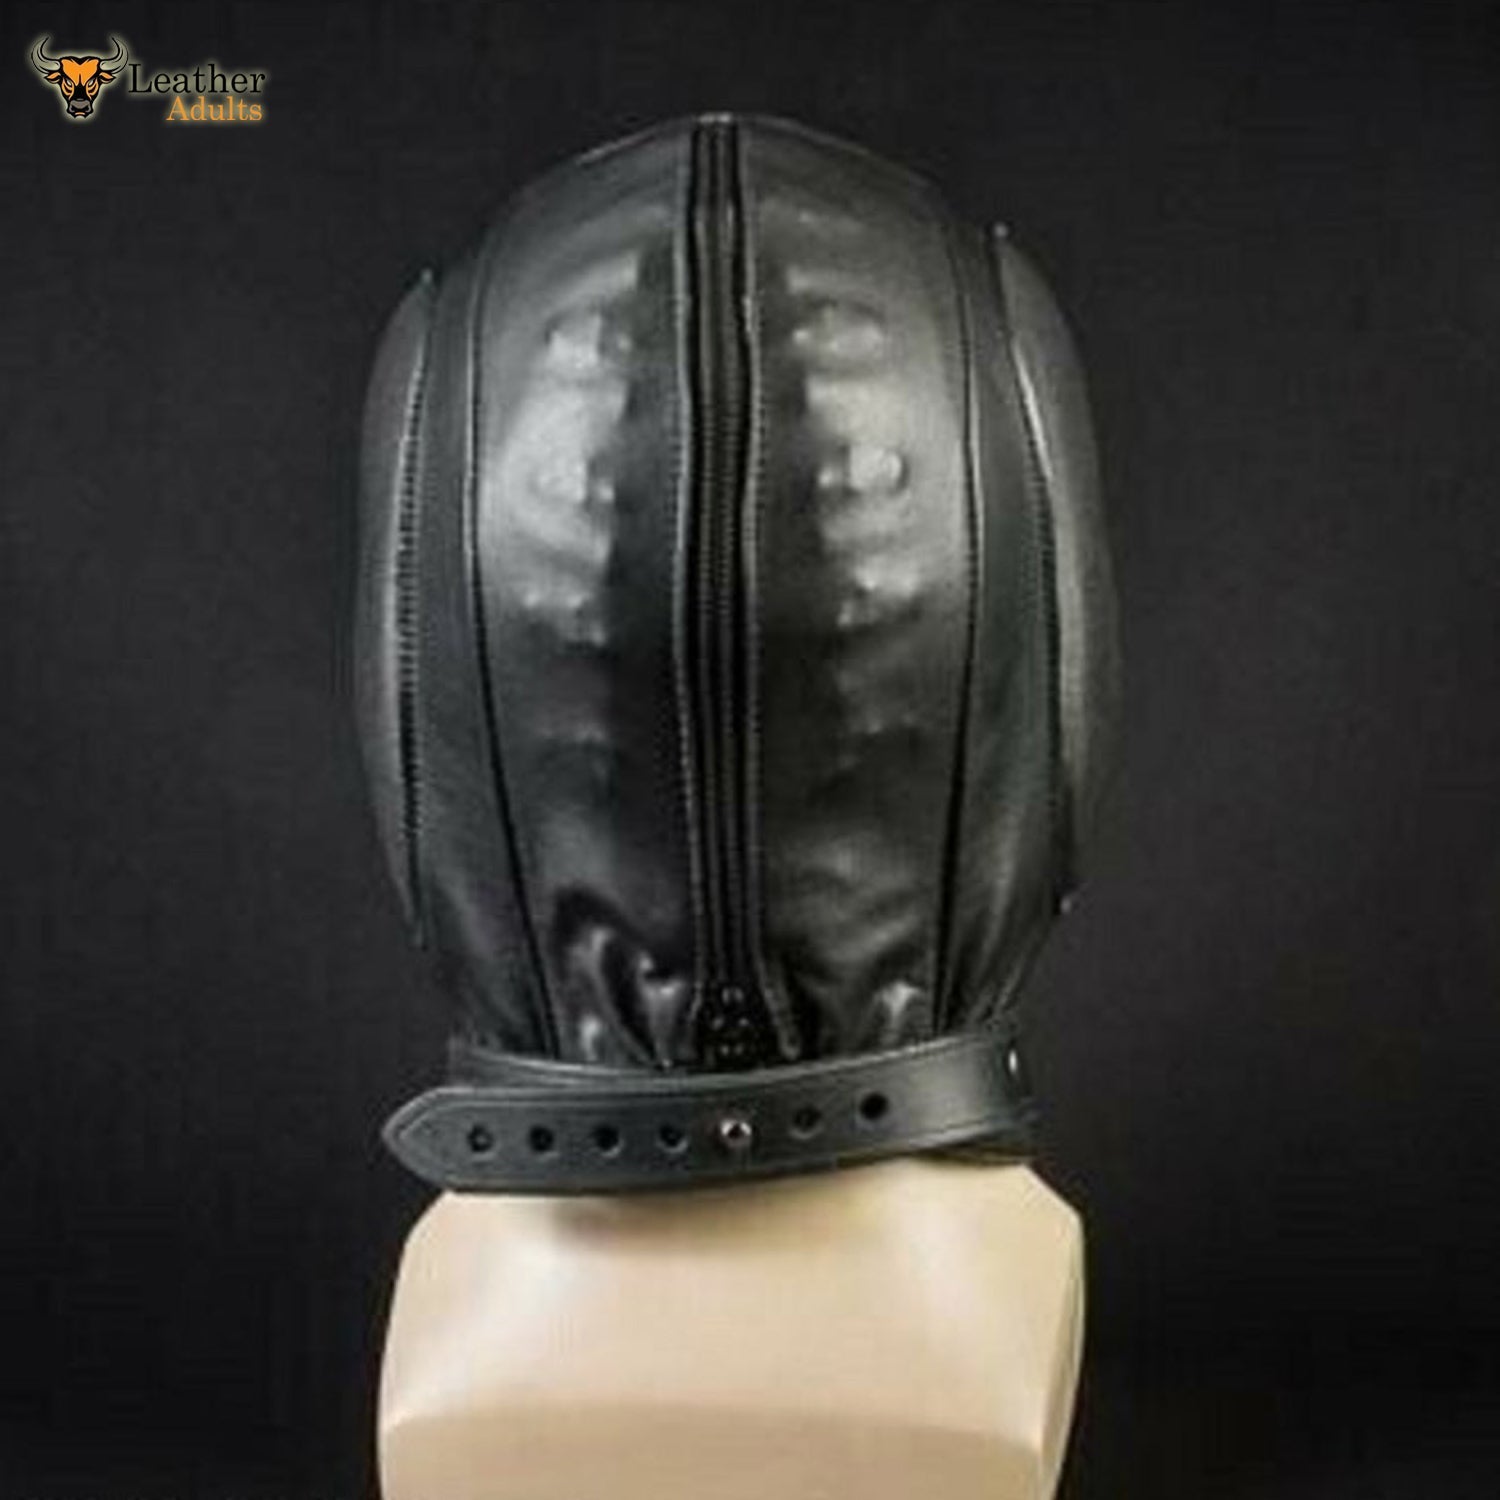 Men Sensory Deprivation Hood Bondage Bdsm Padded Mask Black Soft Leath Leather Adults